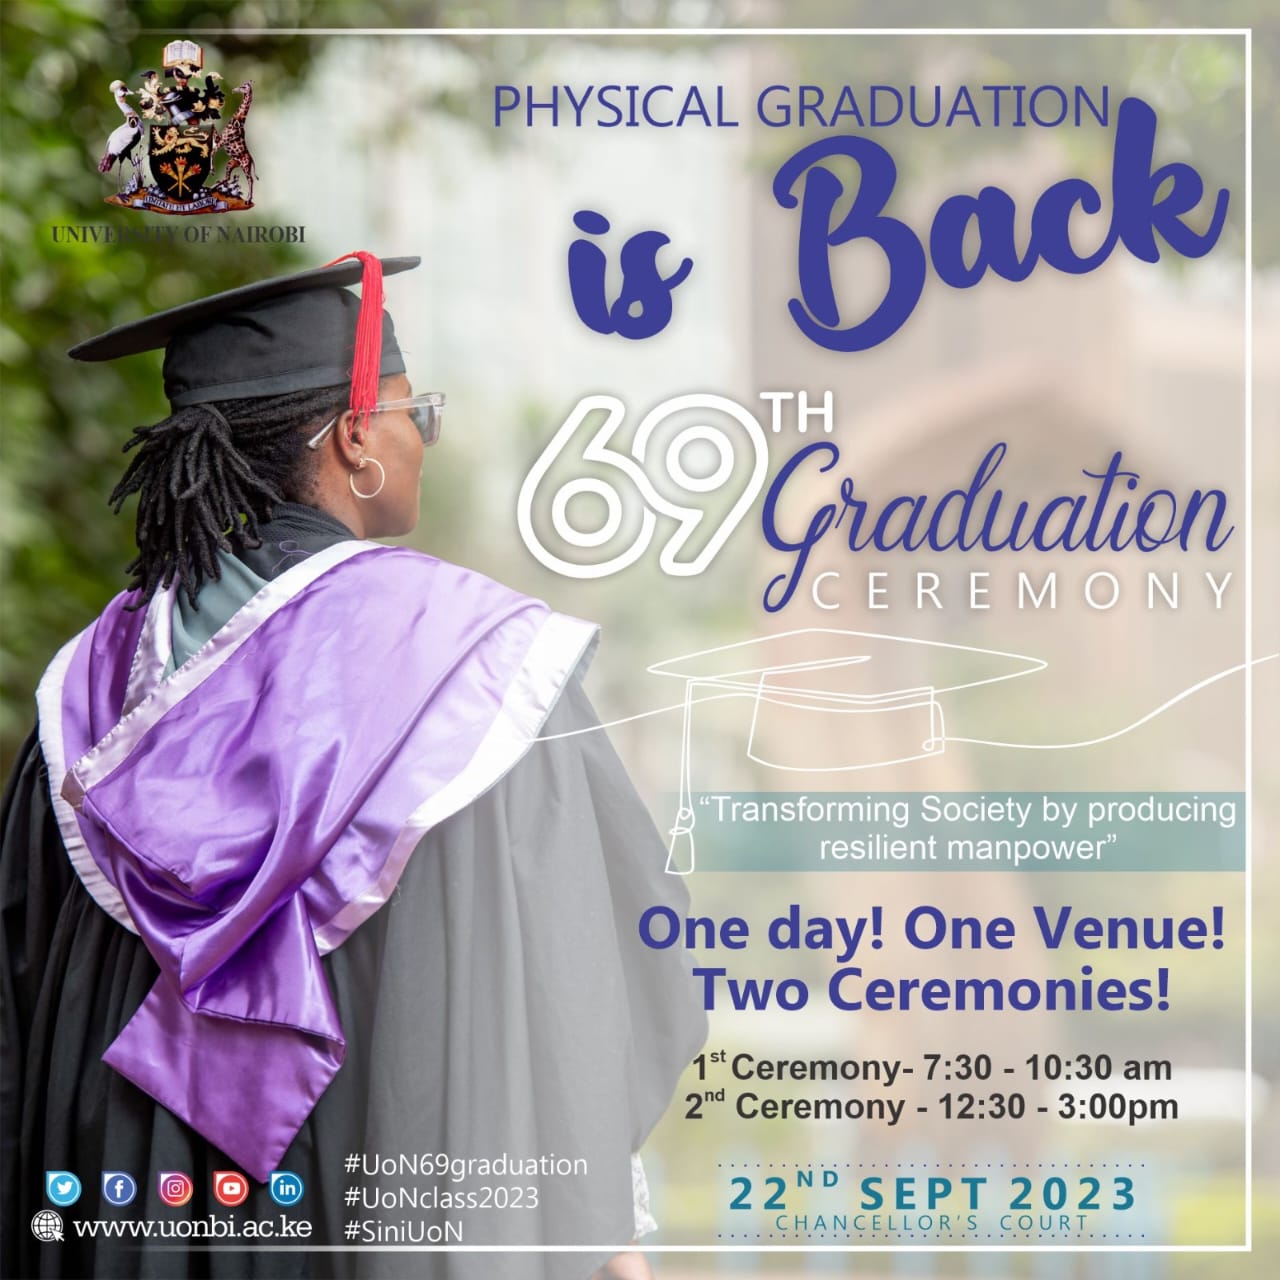 Uon 69th physical Graduation 2023